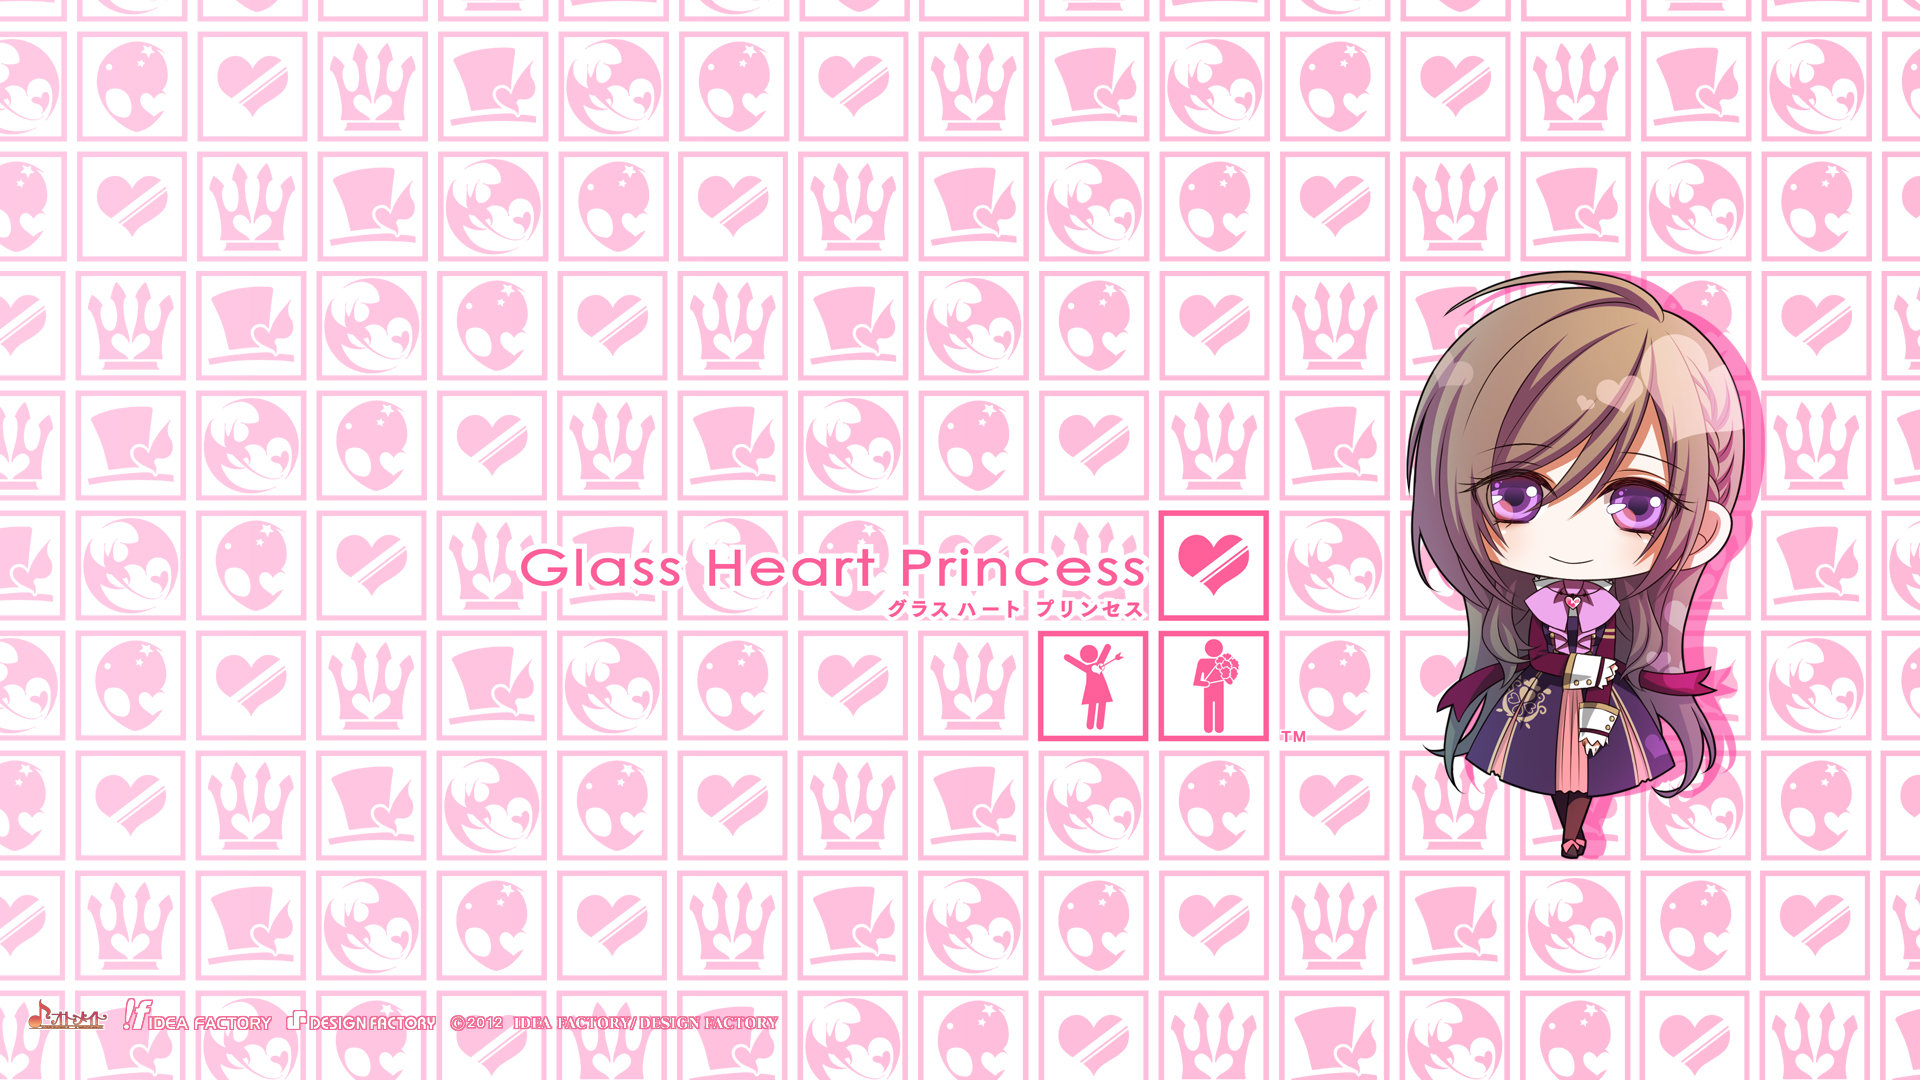 Best Glass Heart Princess wallpaper ID:376101 for High Resolution full hd 1920x1080 PC